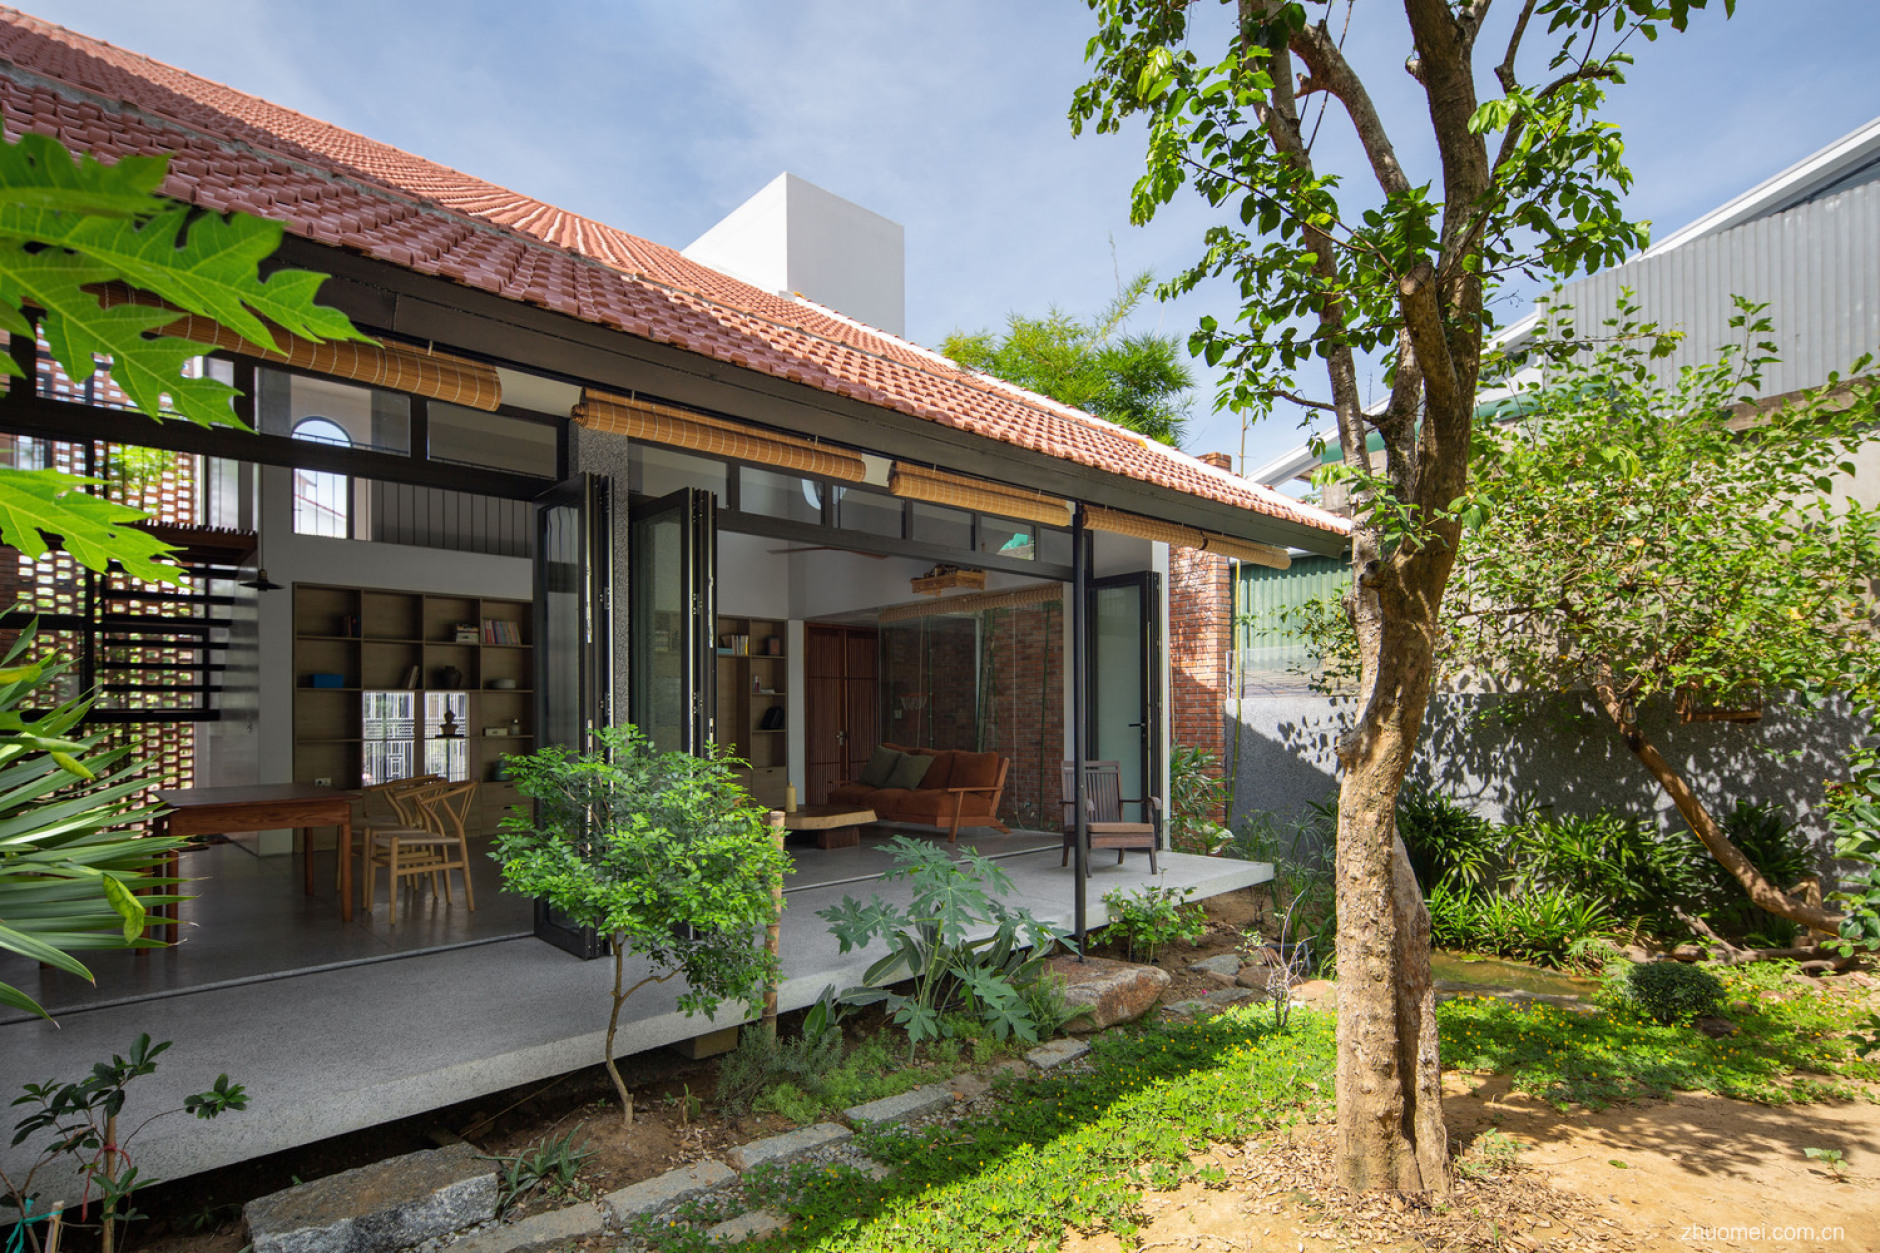 Dom Architect Studio丨The Tiamo House丨越南-9